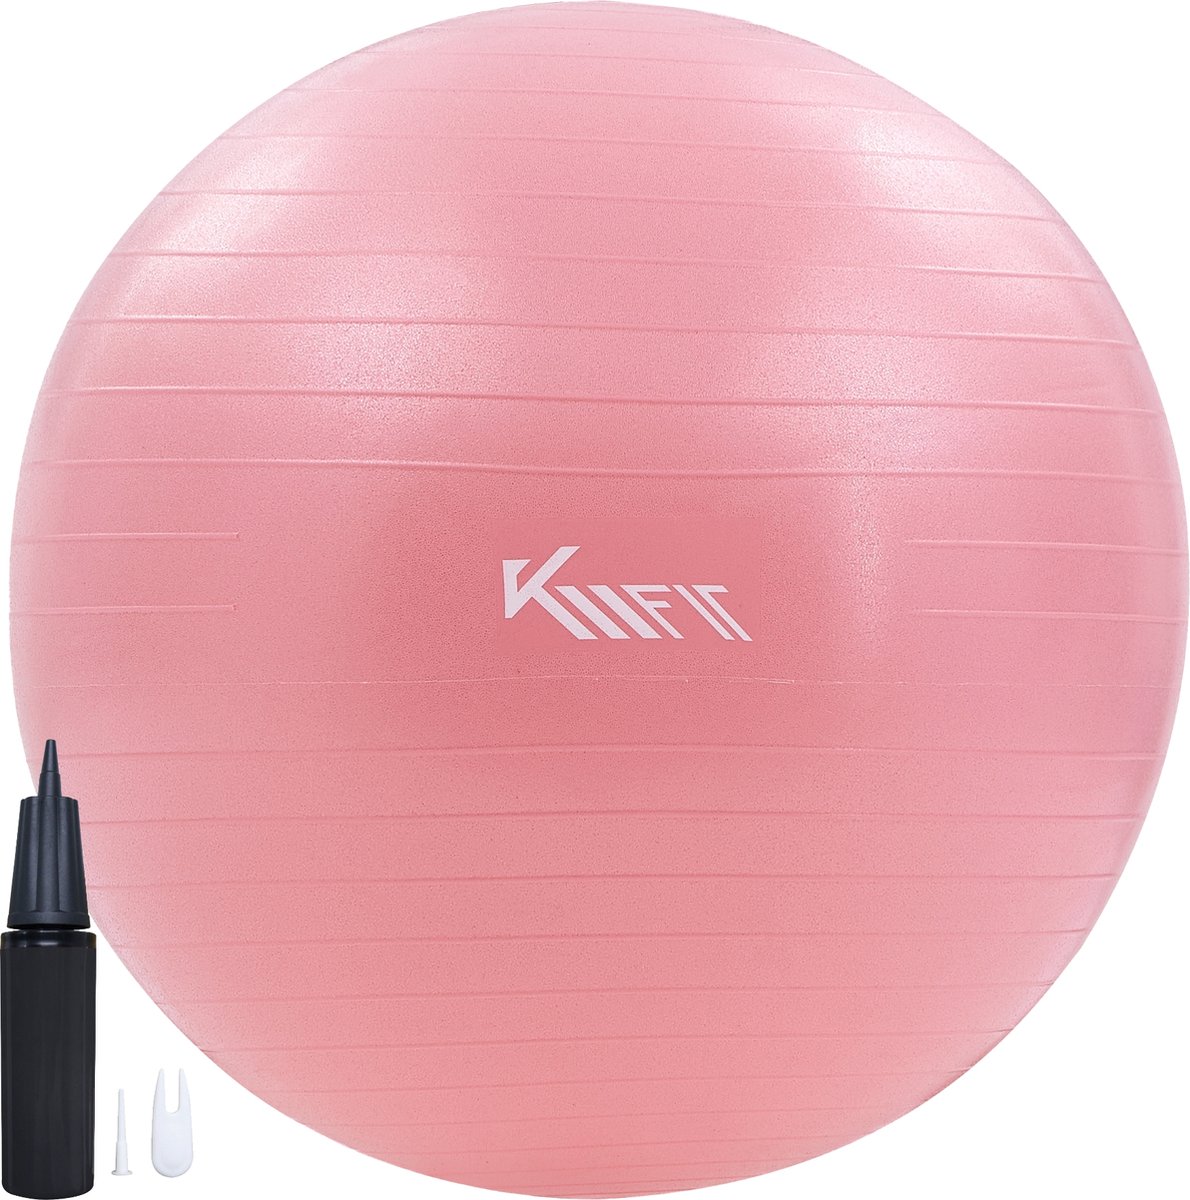 KM-Fit Yoga Bal - 55 cm - Fitness Bal inclusief pomp - Pilates bal - BPA-vrij materiaal - Zwangerschapsbal - Roze